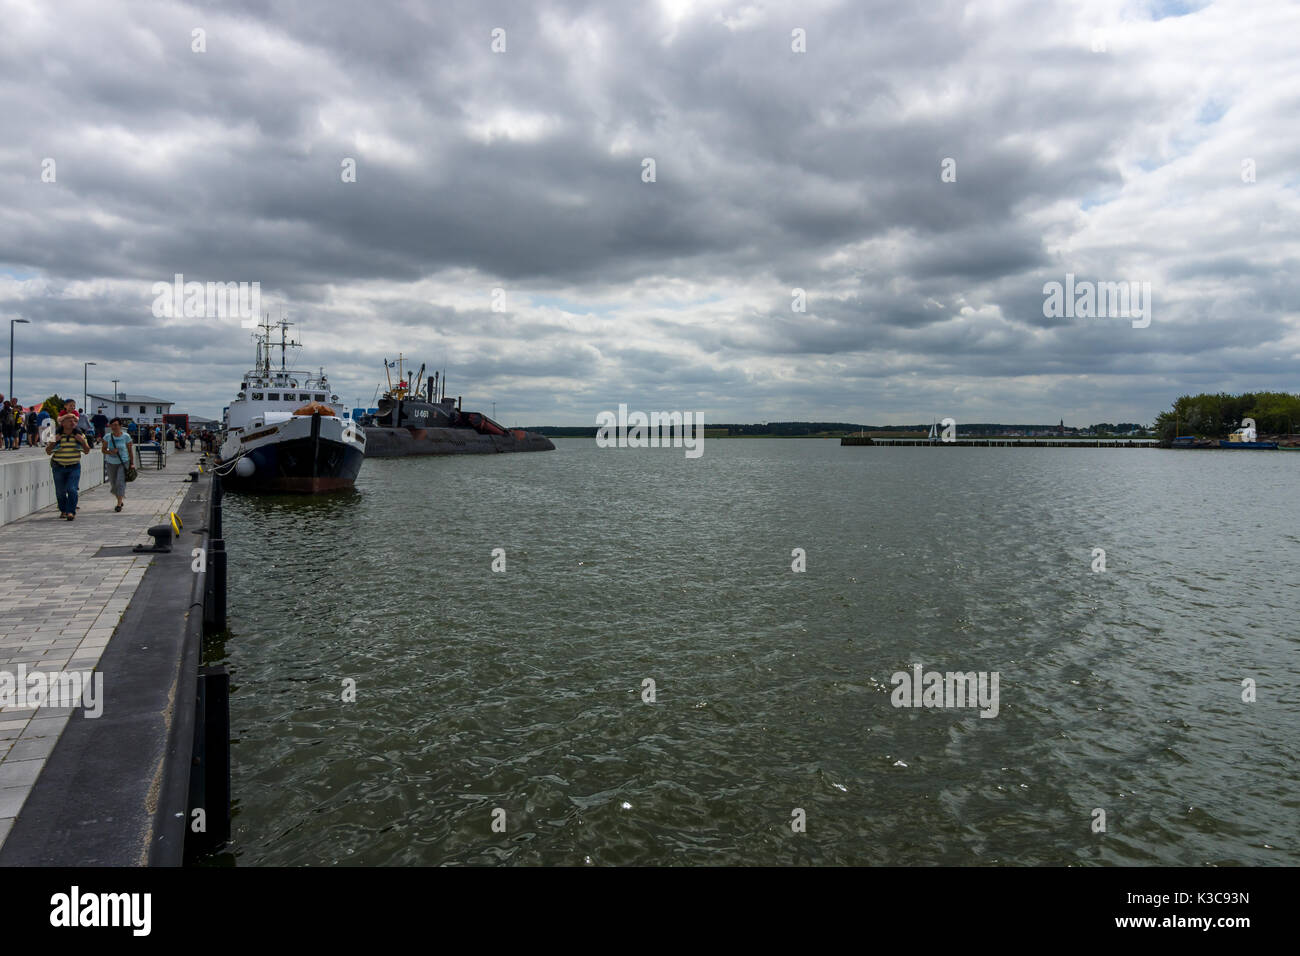 View on Peenemuende seaport on the Baltic Sea island of Usedom. In the background, the Soviet Juliett-class submarine K-24 (U461). Stock Photo